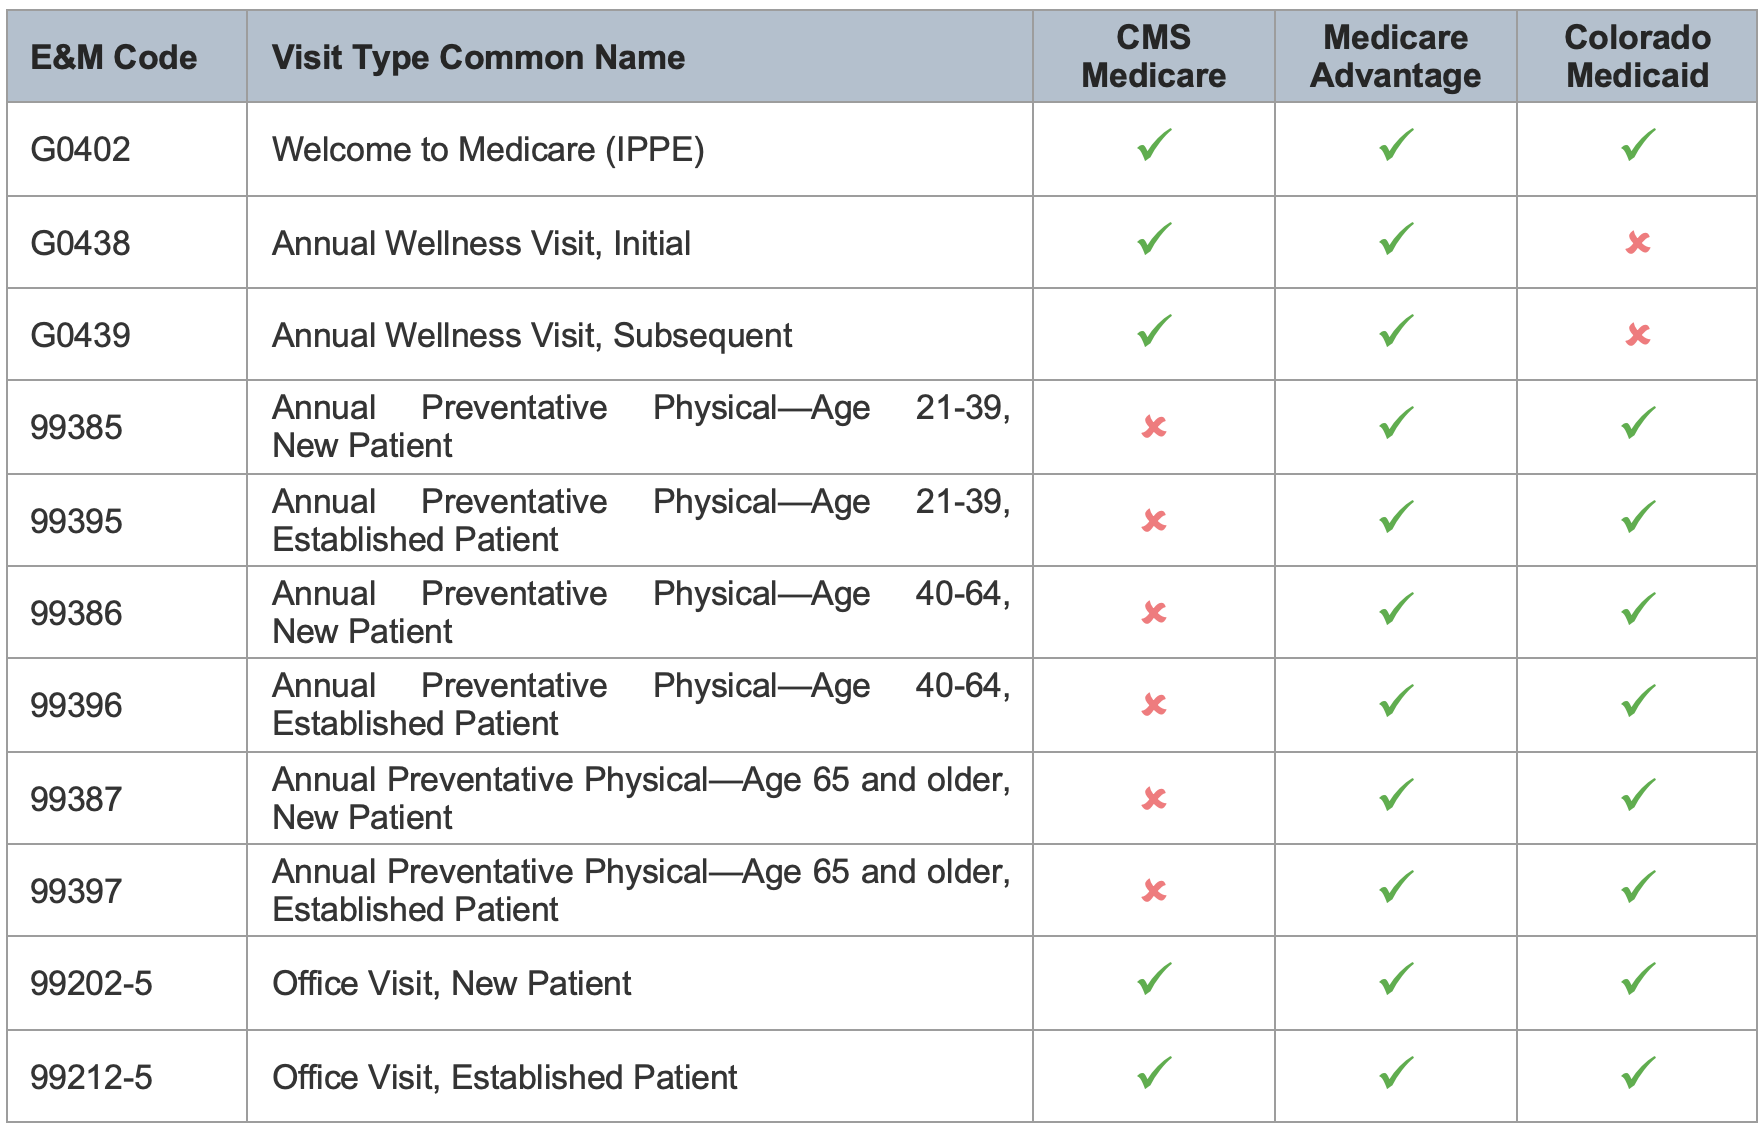 Table comparing E&M Code, Visit Type Common Name, CMS Medicare, Medicare Advantage, Colorado Medicaid